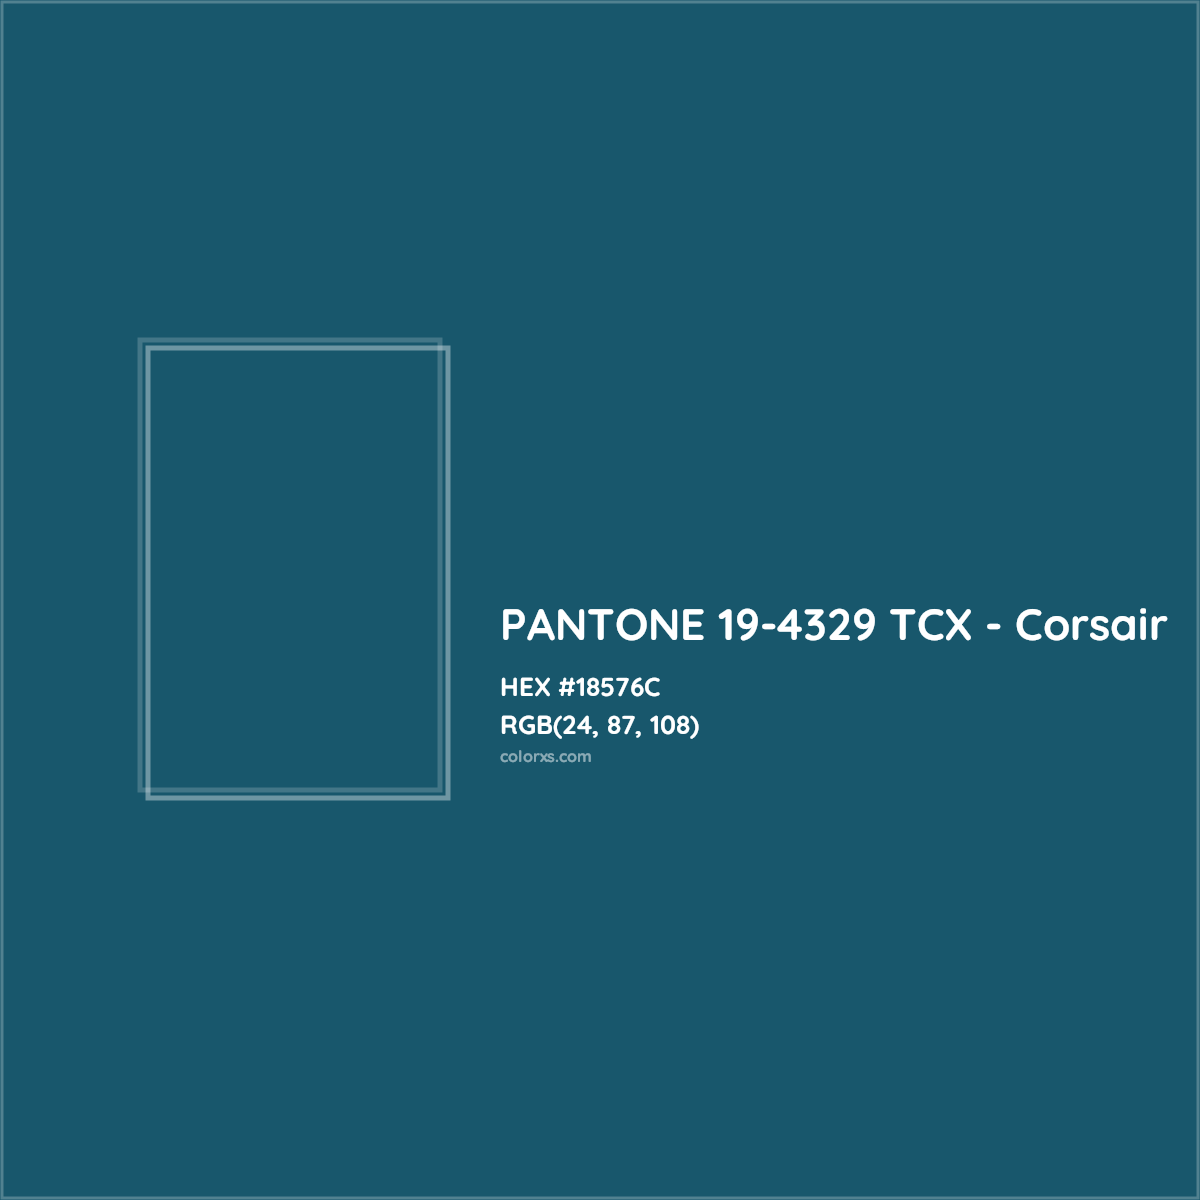 HEX #18576C PANTONE 19-4329 TCX - Corsair CMS Pantone TCX - Color Code